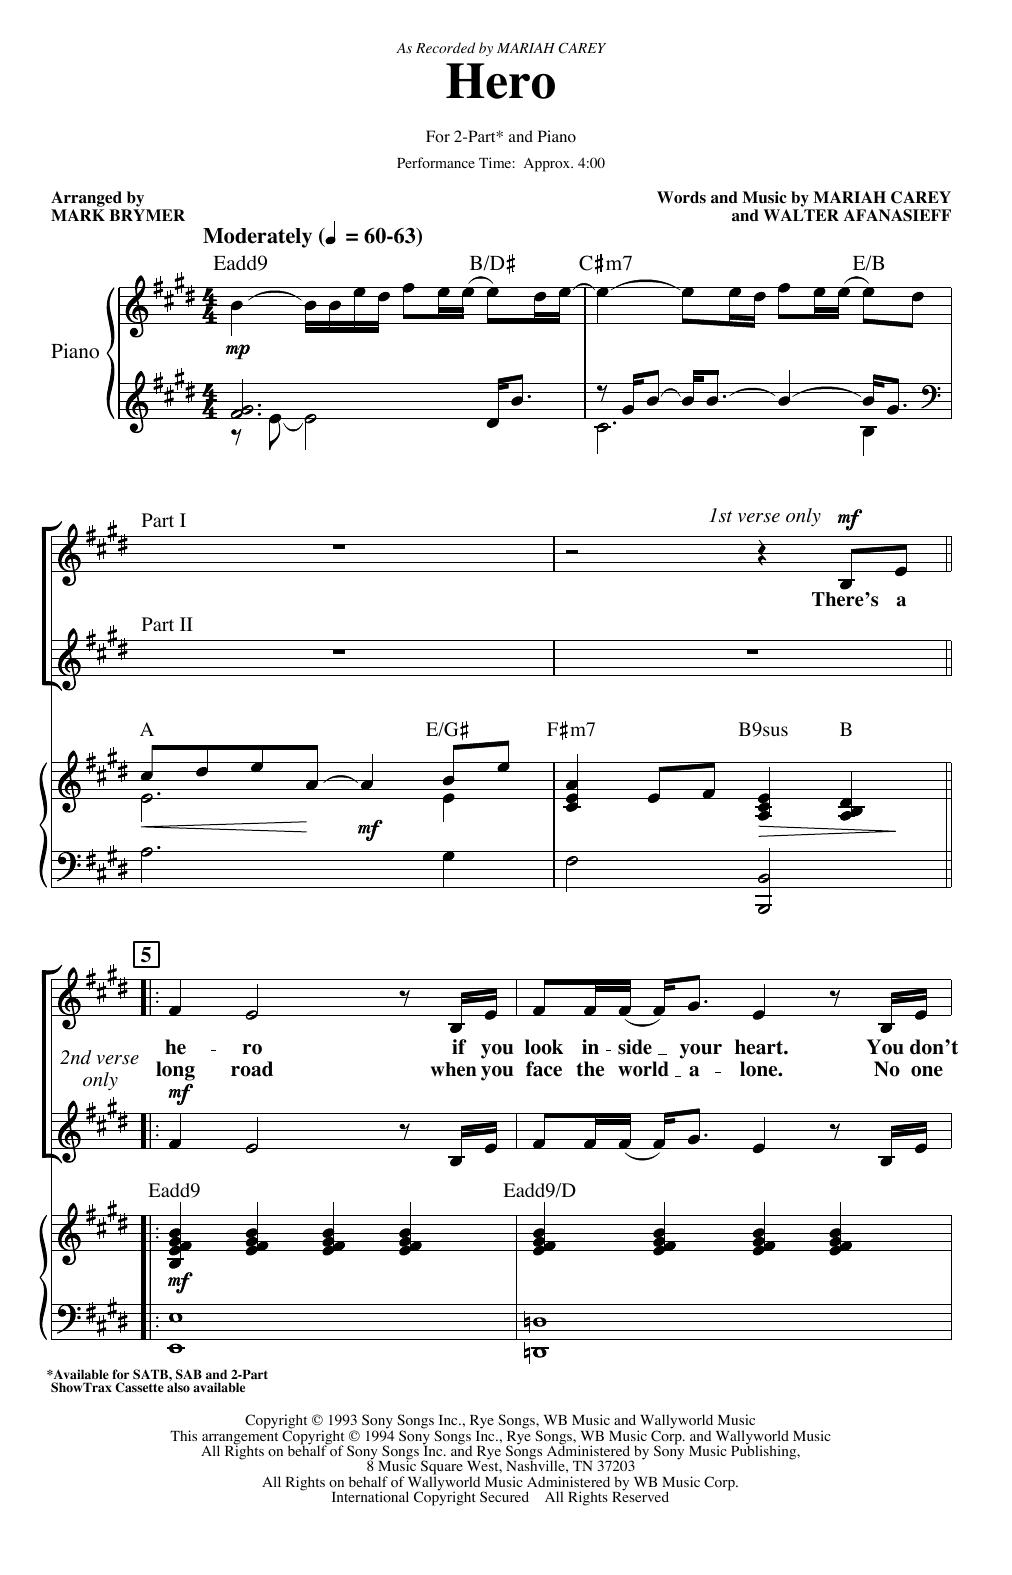 Mariah Carey Hero (arr. Mark Brymer) Sheet Music Notes & Chords for 2-Part Choir - Download or Print PDF